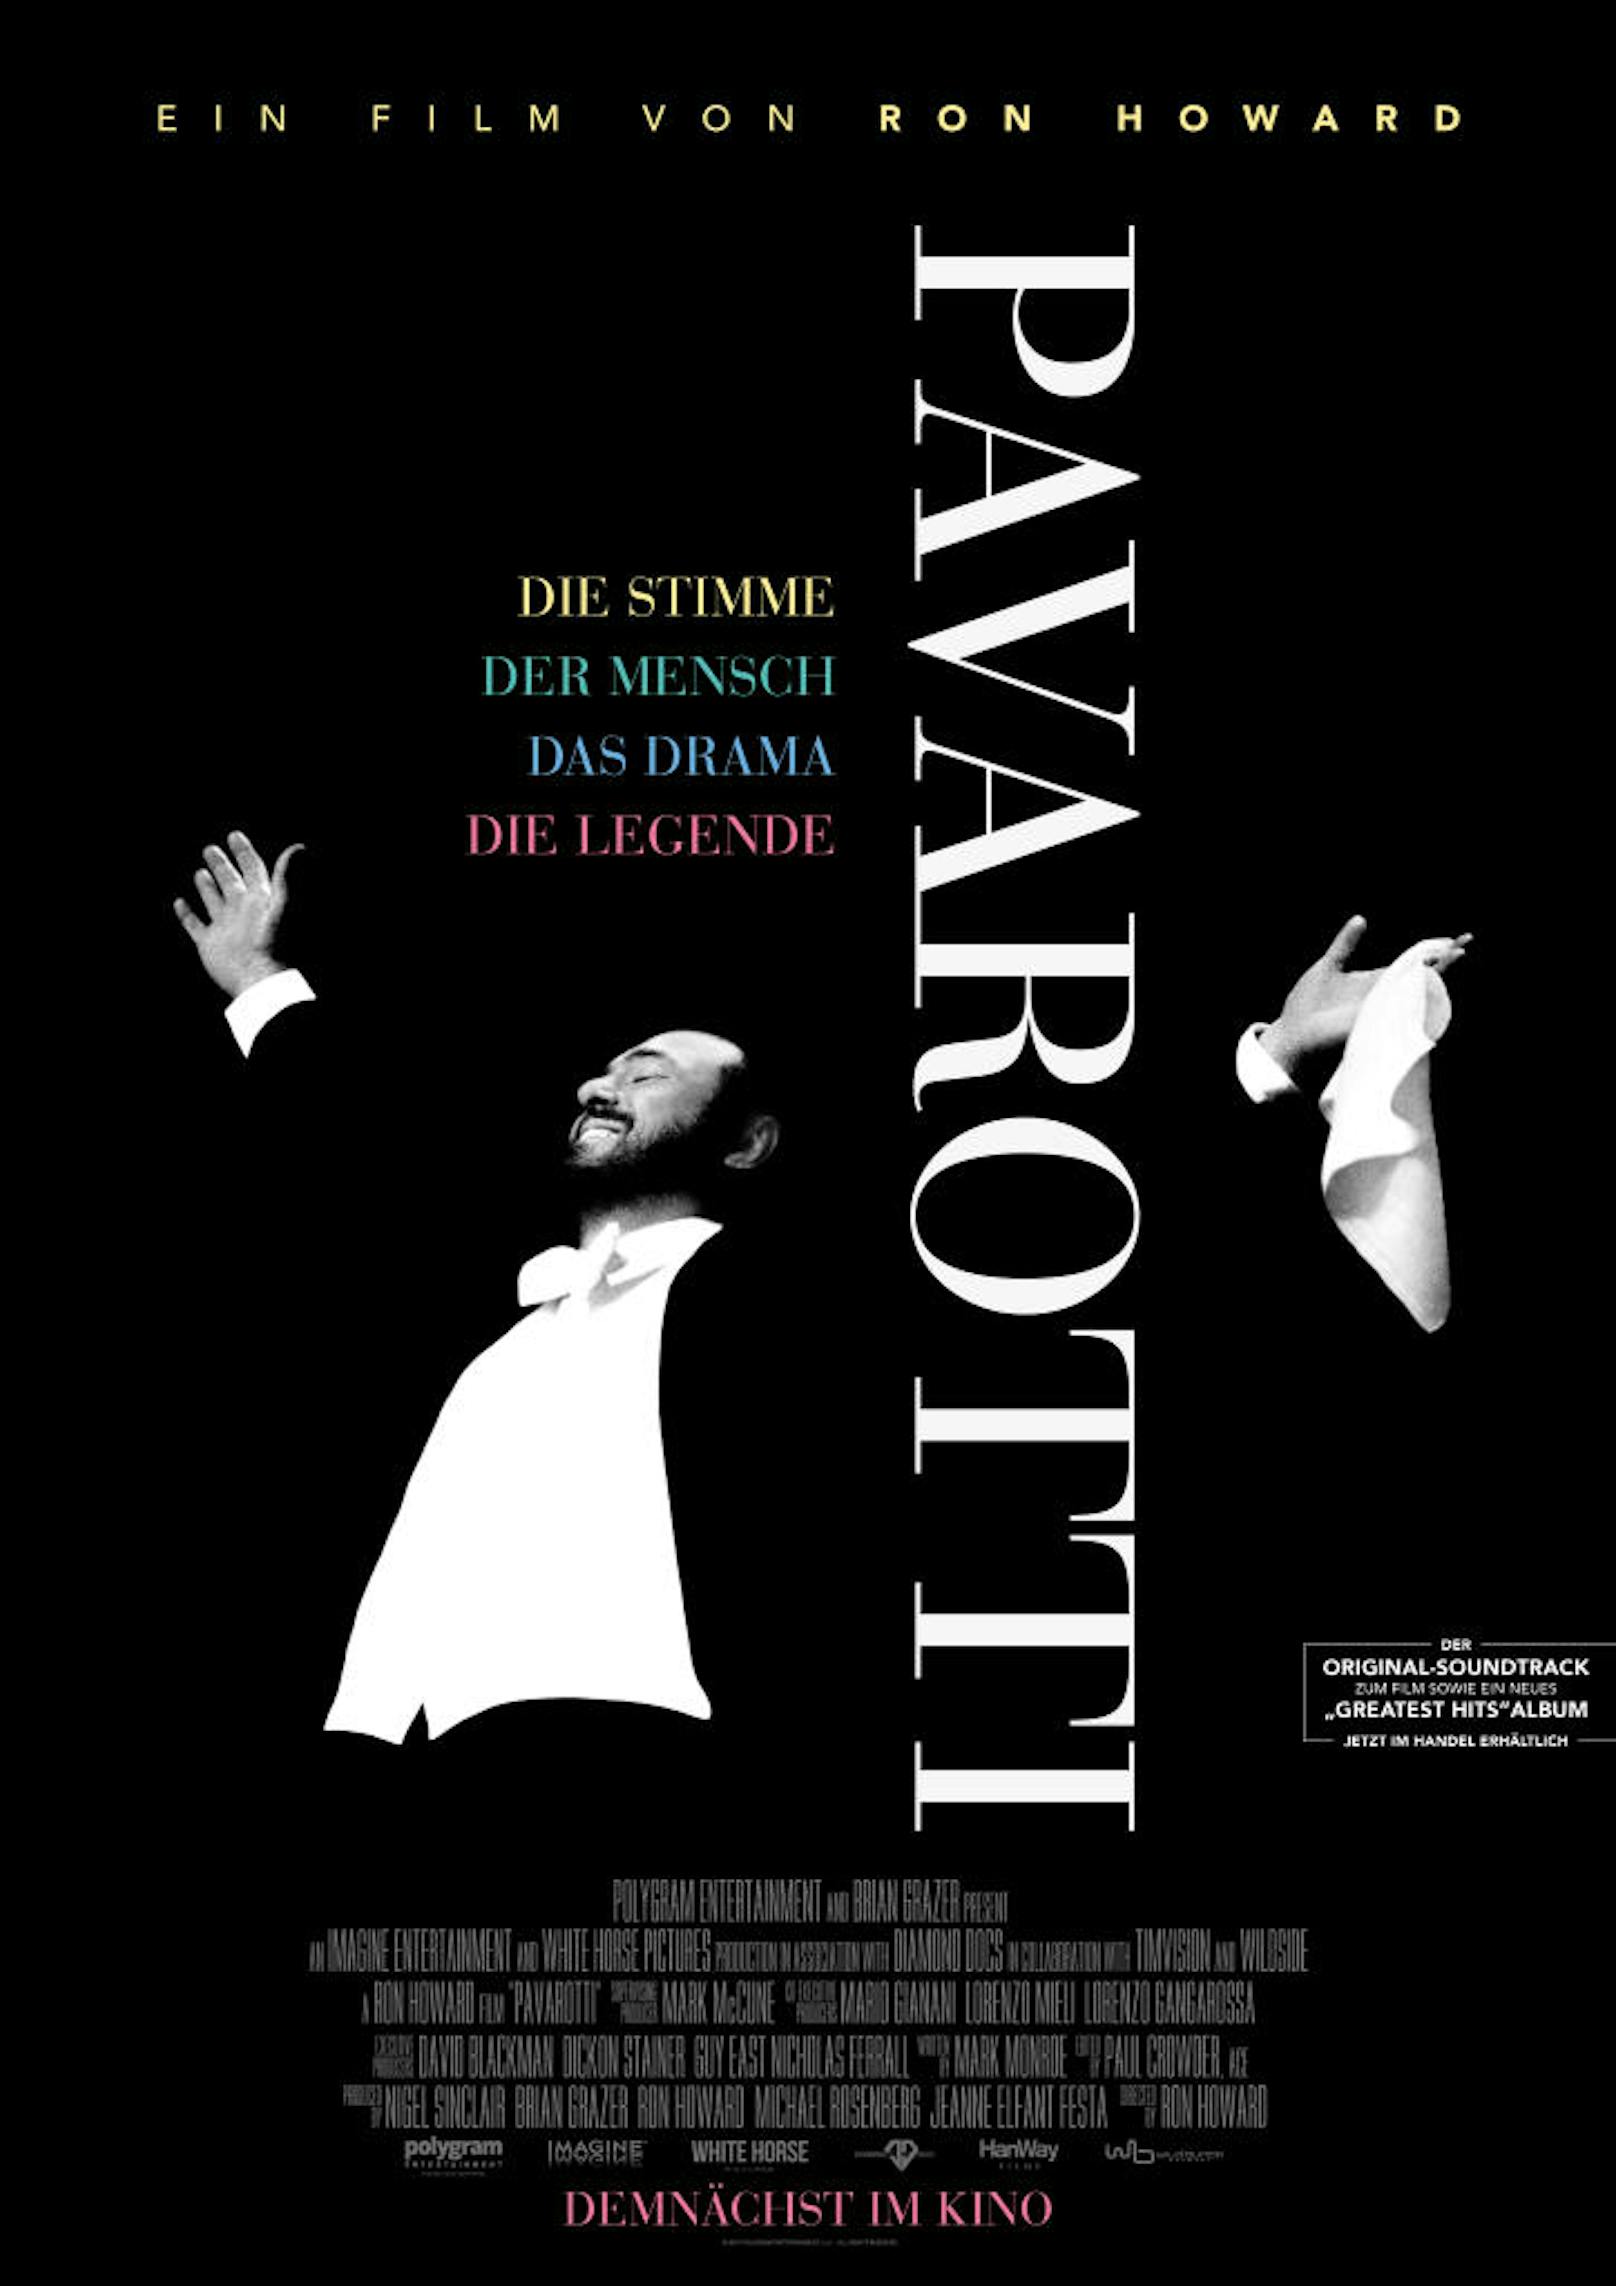 Szenenbild zum Film "Pavarotti", 
ab 26.12.2019 im Kino